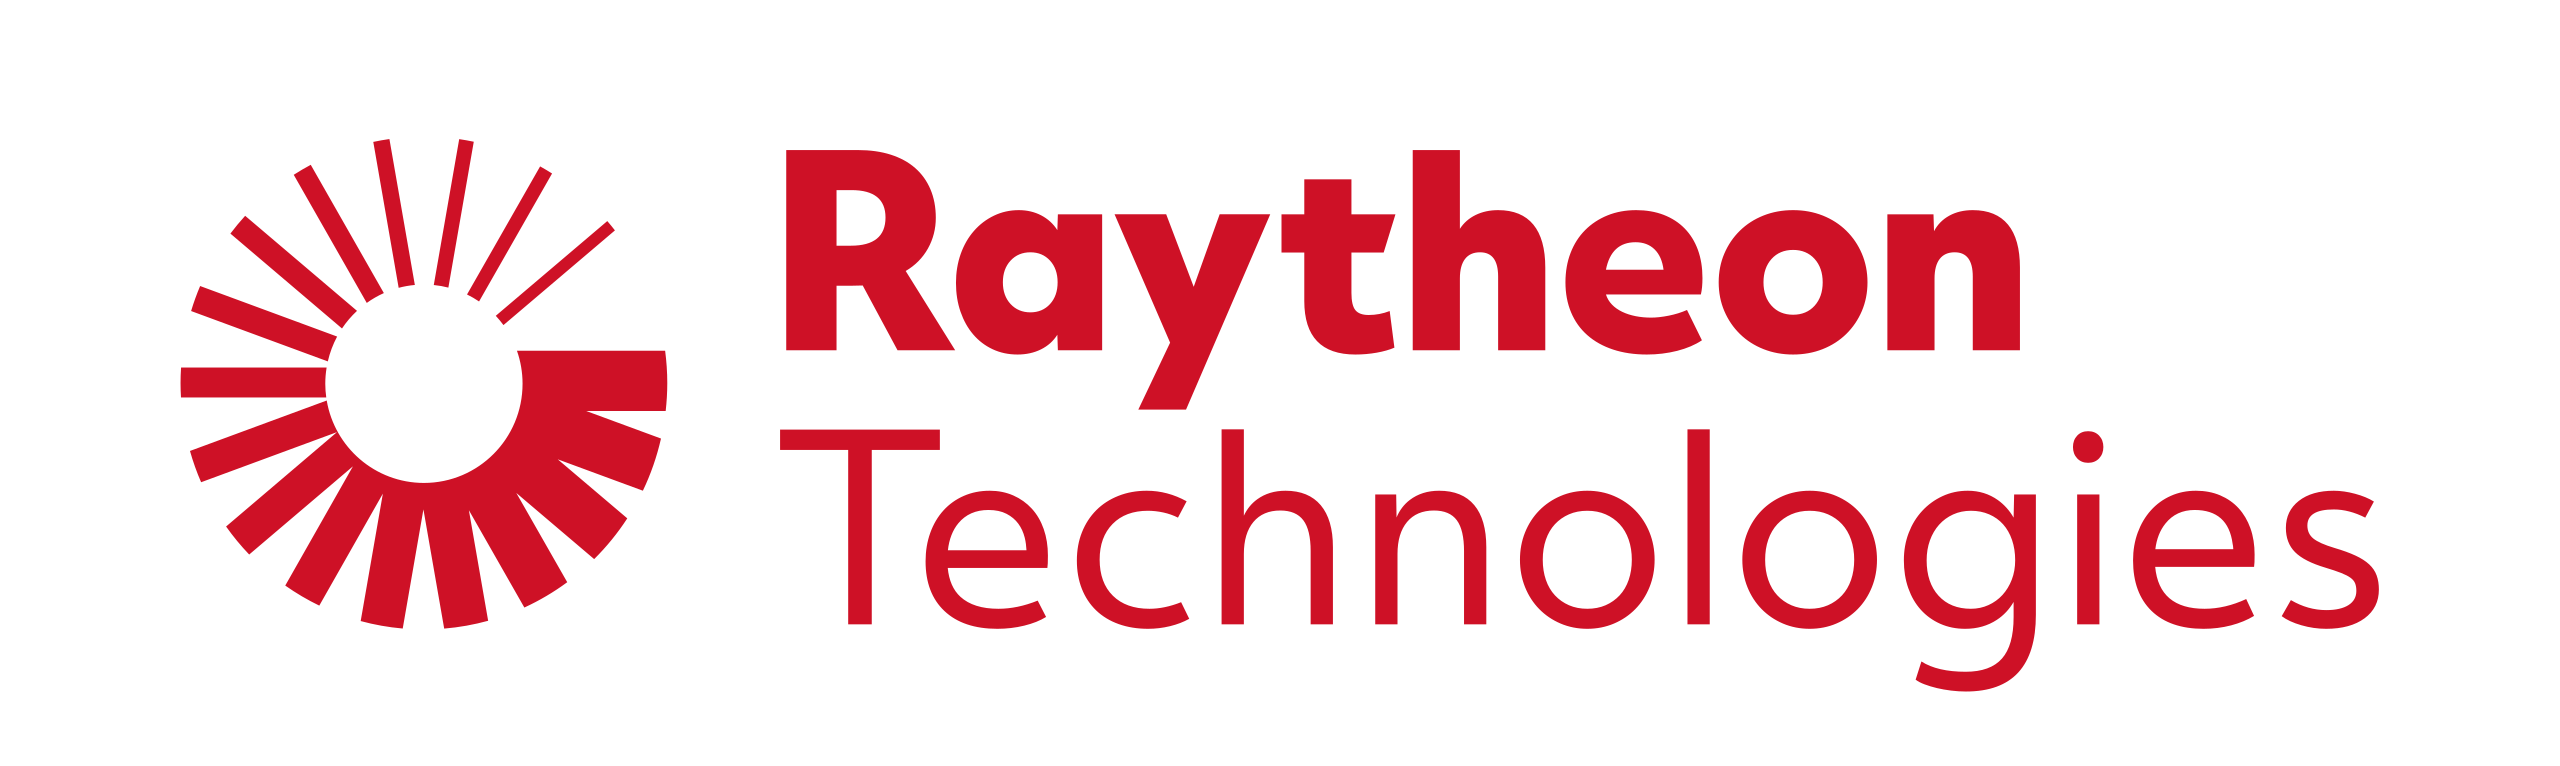 Raytheon Technologies Logo.Svg